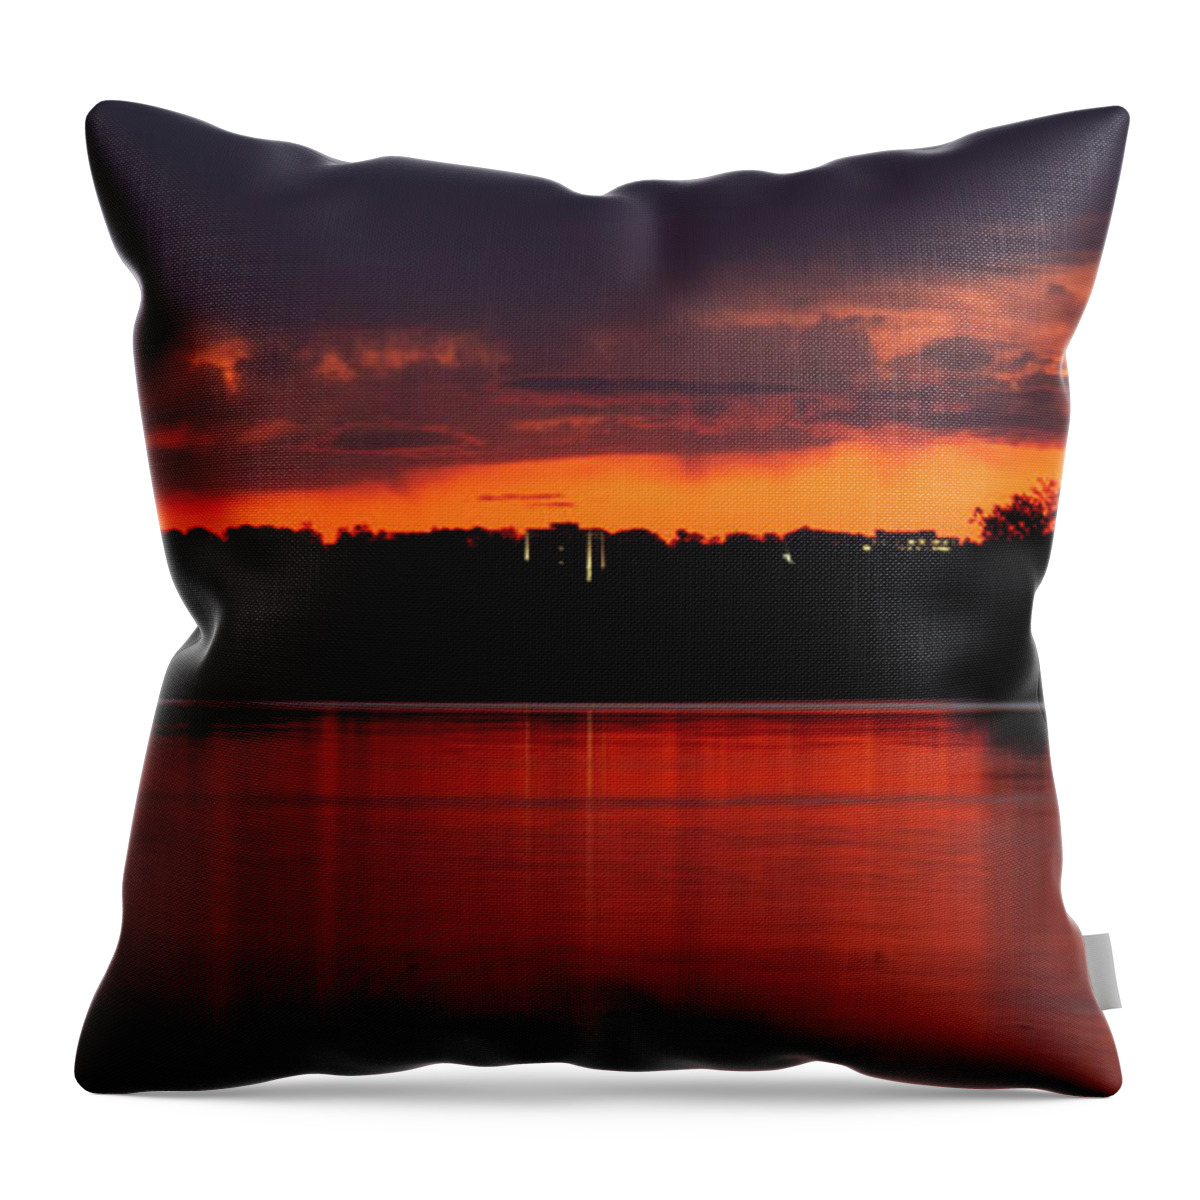 Loch Raven Reservoir Throw Pillow featuring the photograph Loch Raven Sunset by Chris Scroggins